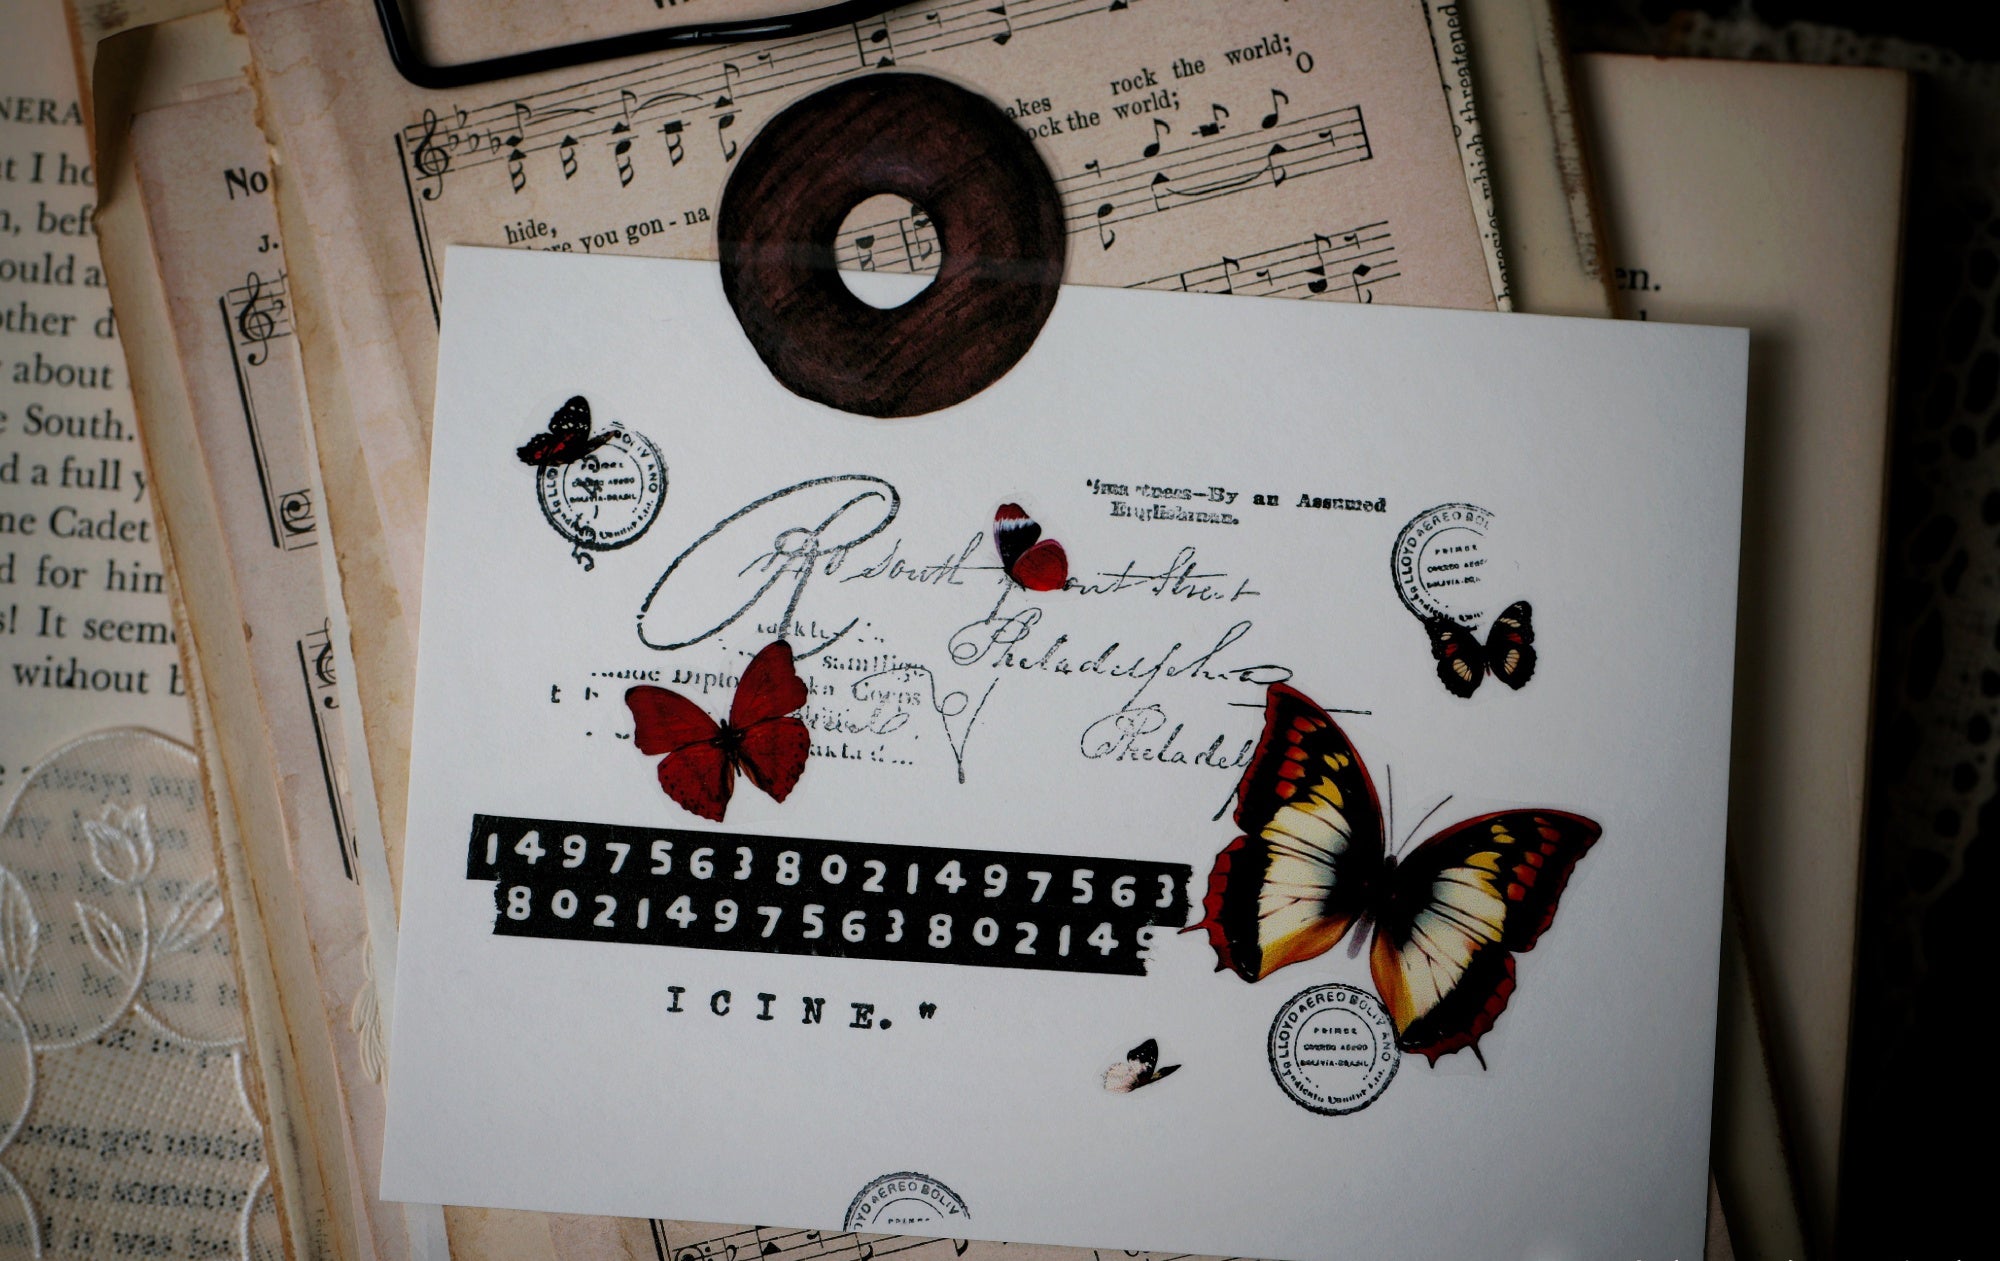 Benchu Studio Masking Tape: Lots of Butterflies